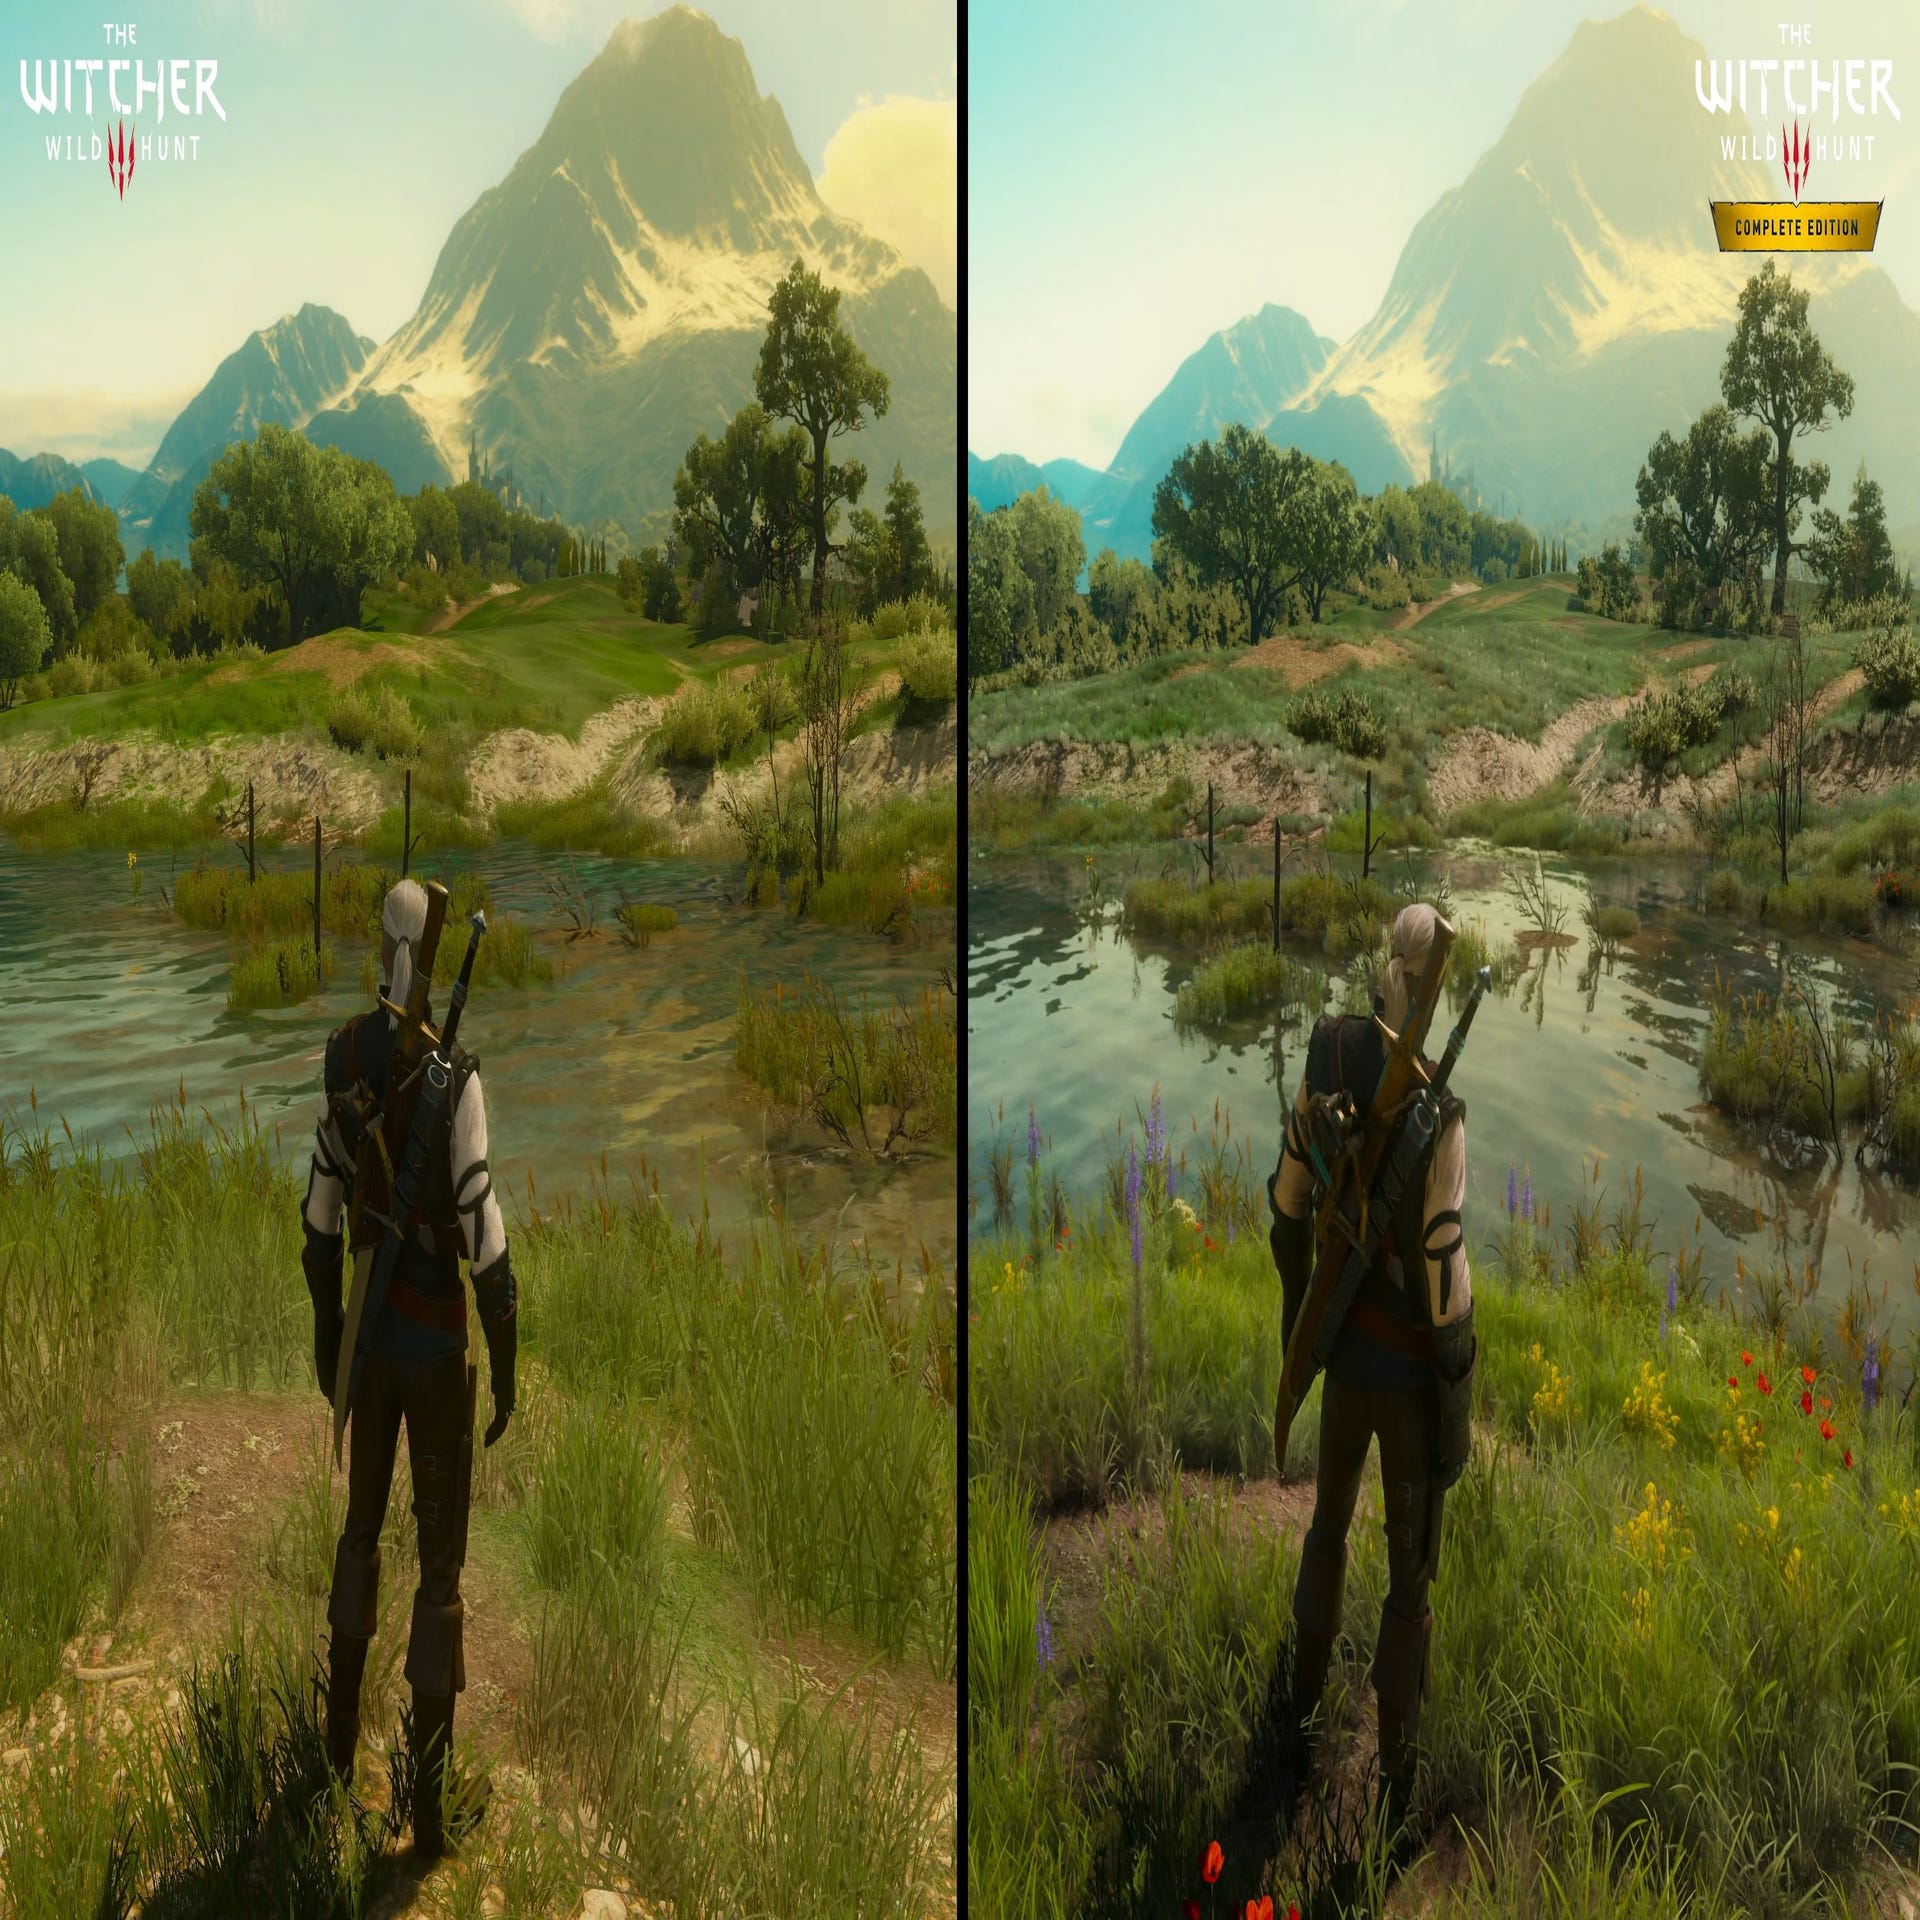 The Witcher 3 Next Gen - DirectX 11 vs DirectX 12 - Benchmark Comparison 